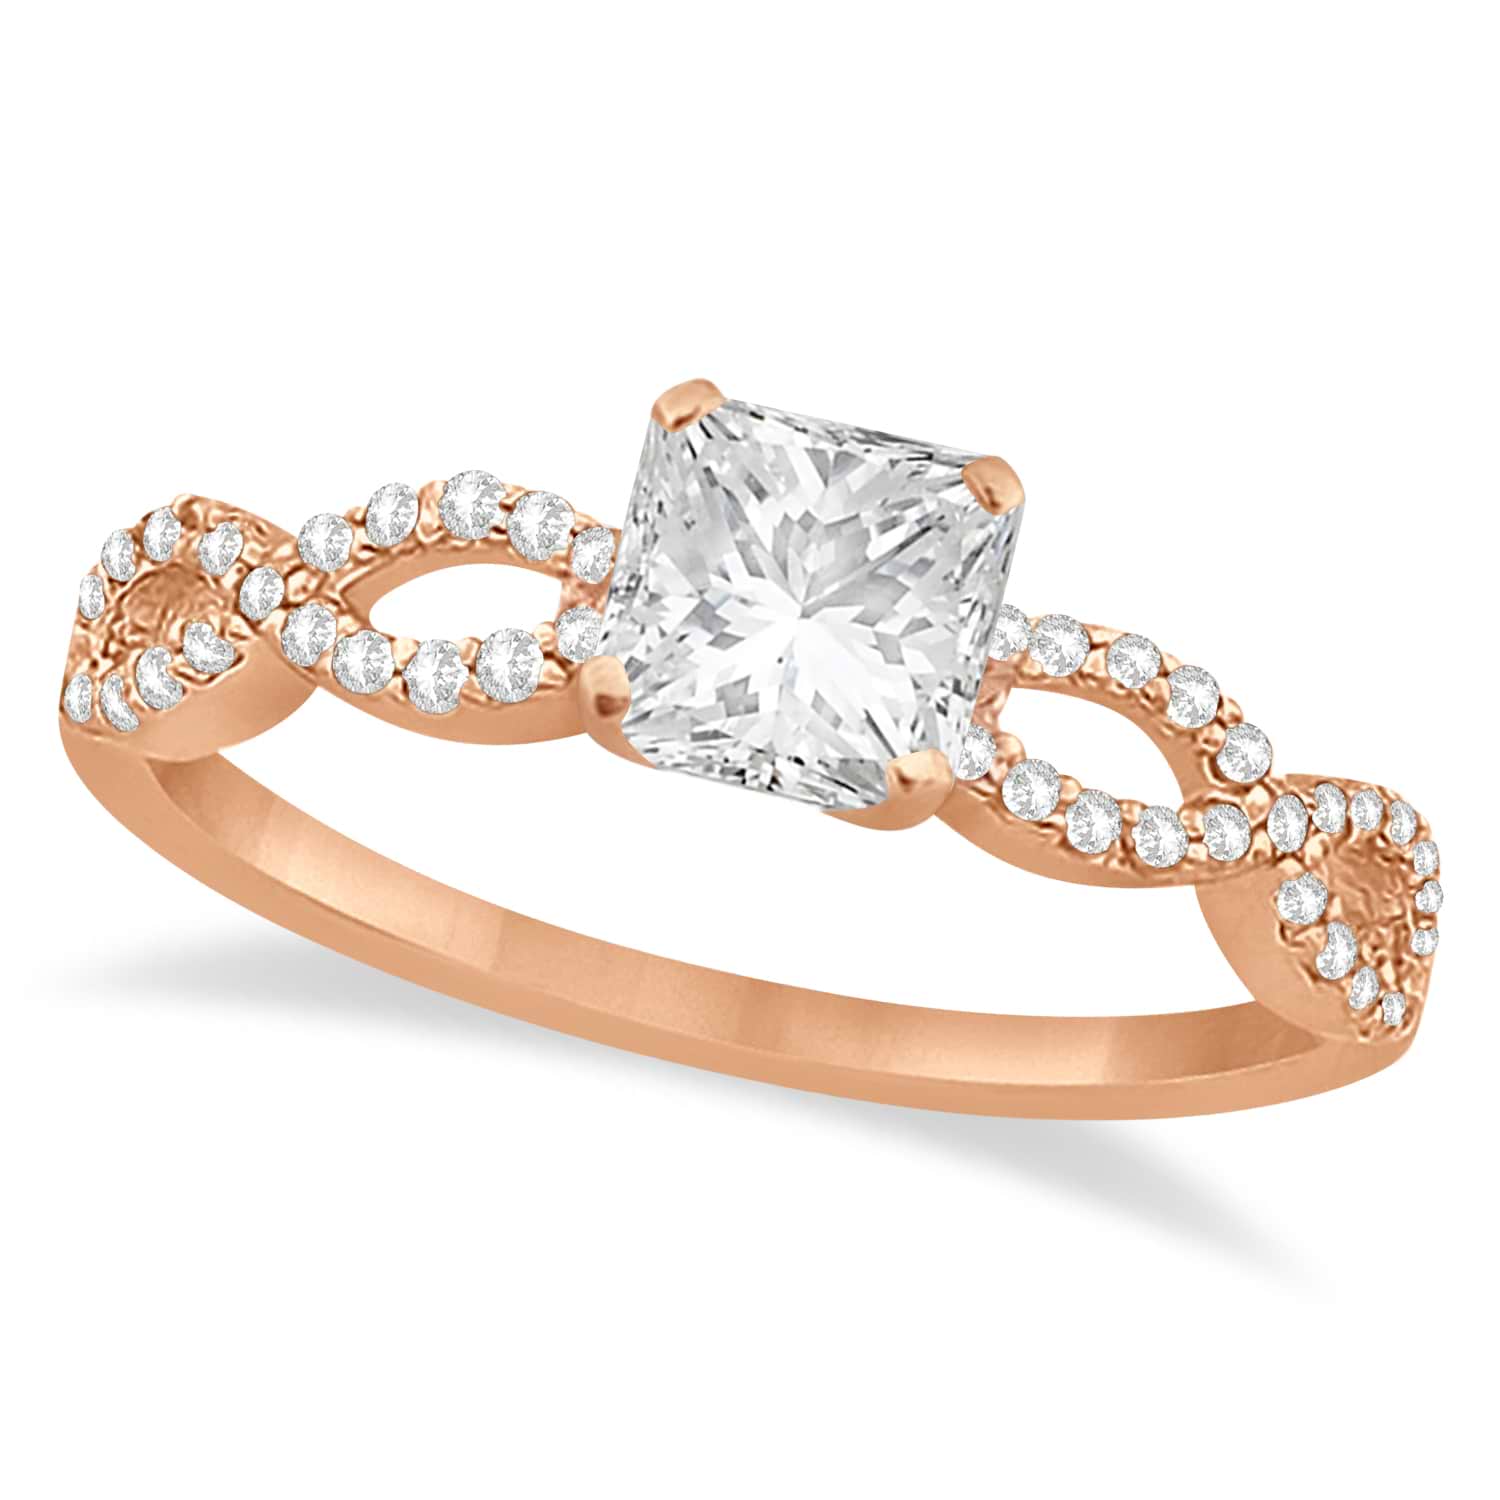 Twisted Infinity Princess Diamond Bridal Set 14k Rose Gold (2.13ct)